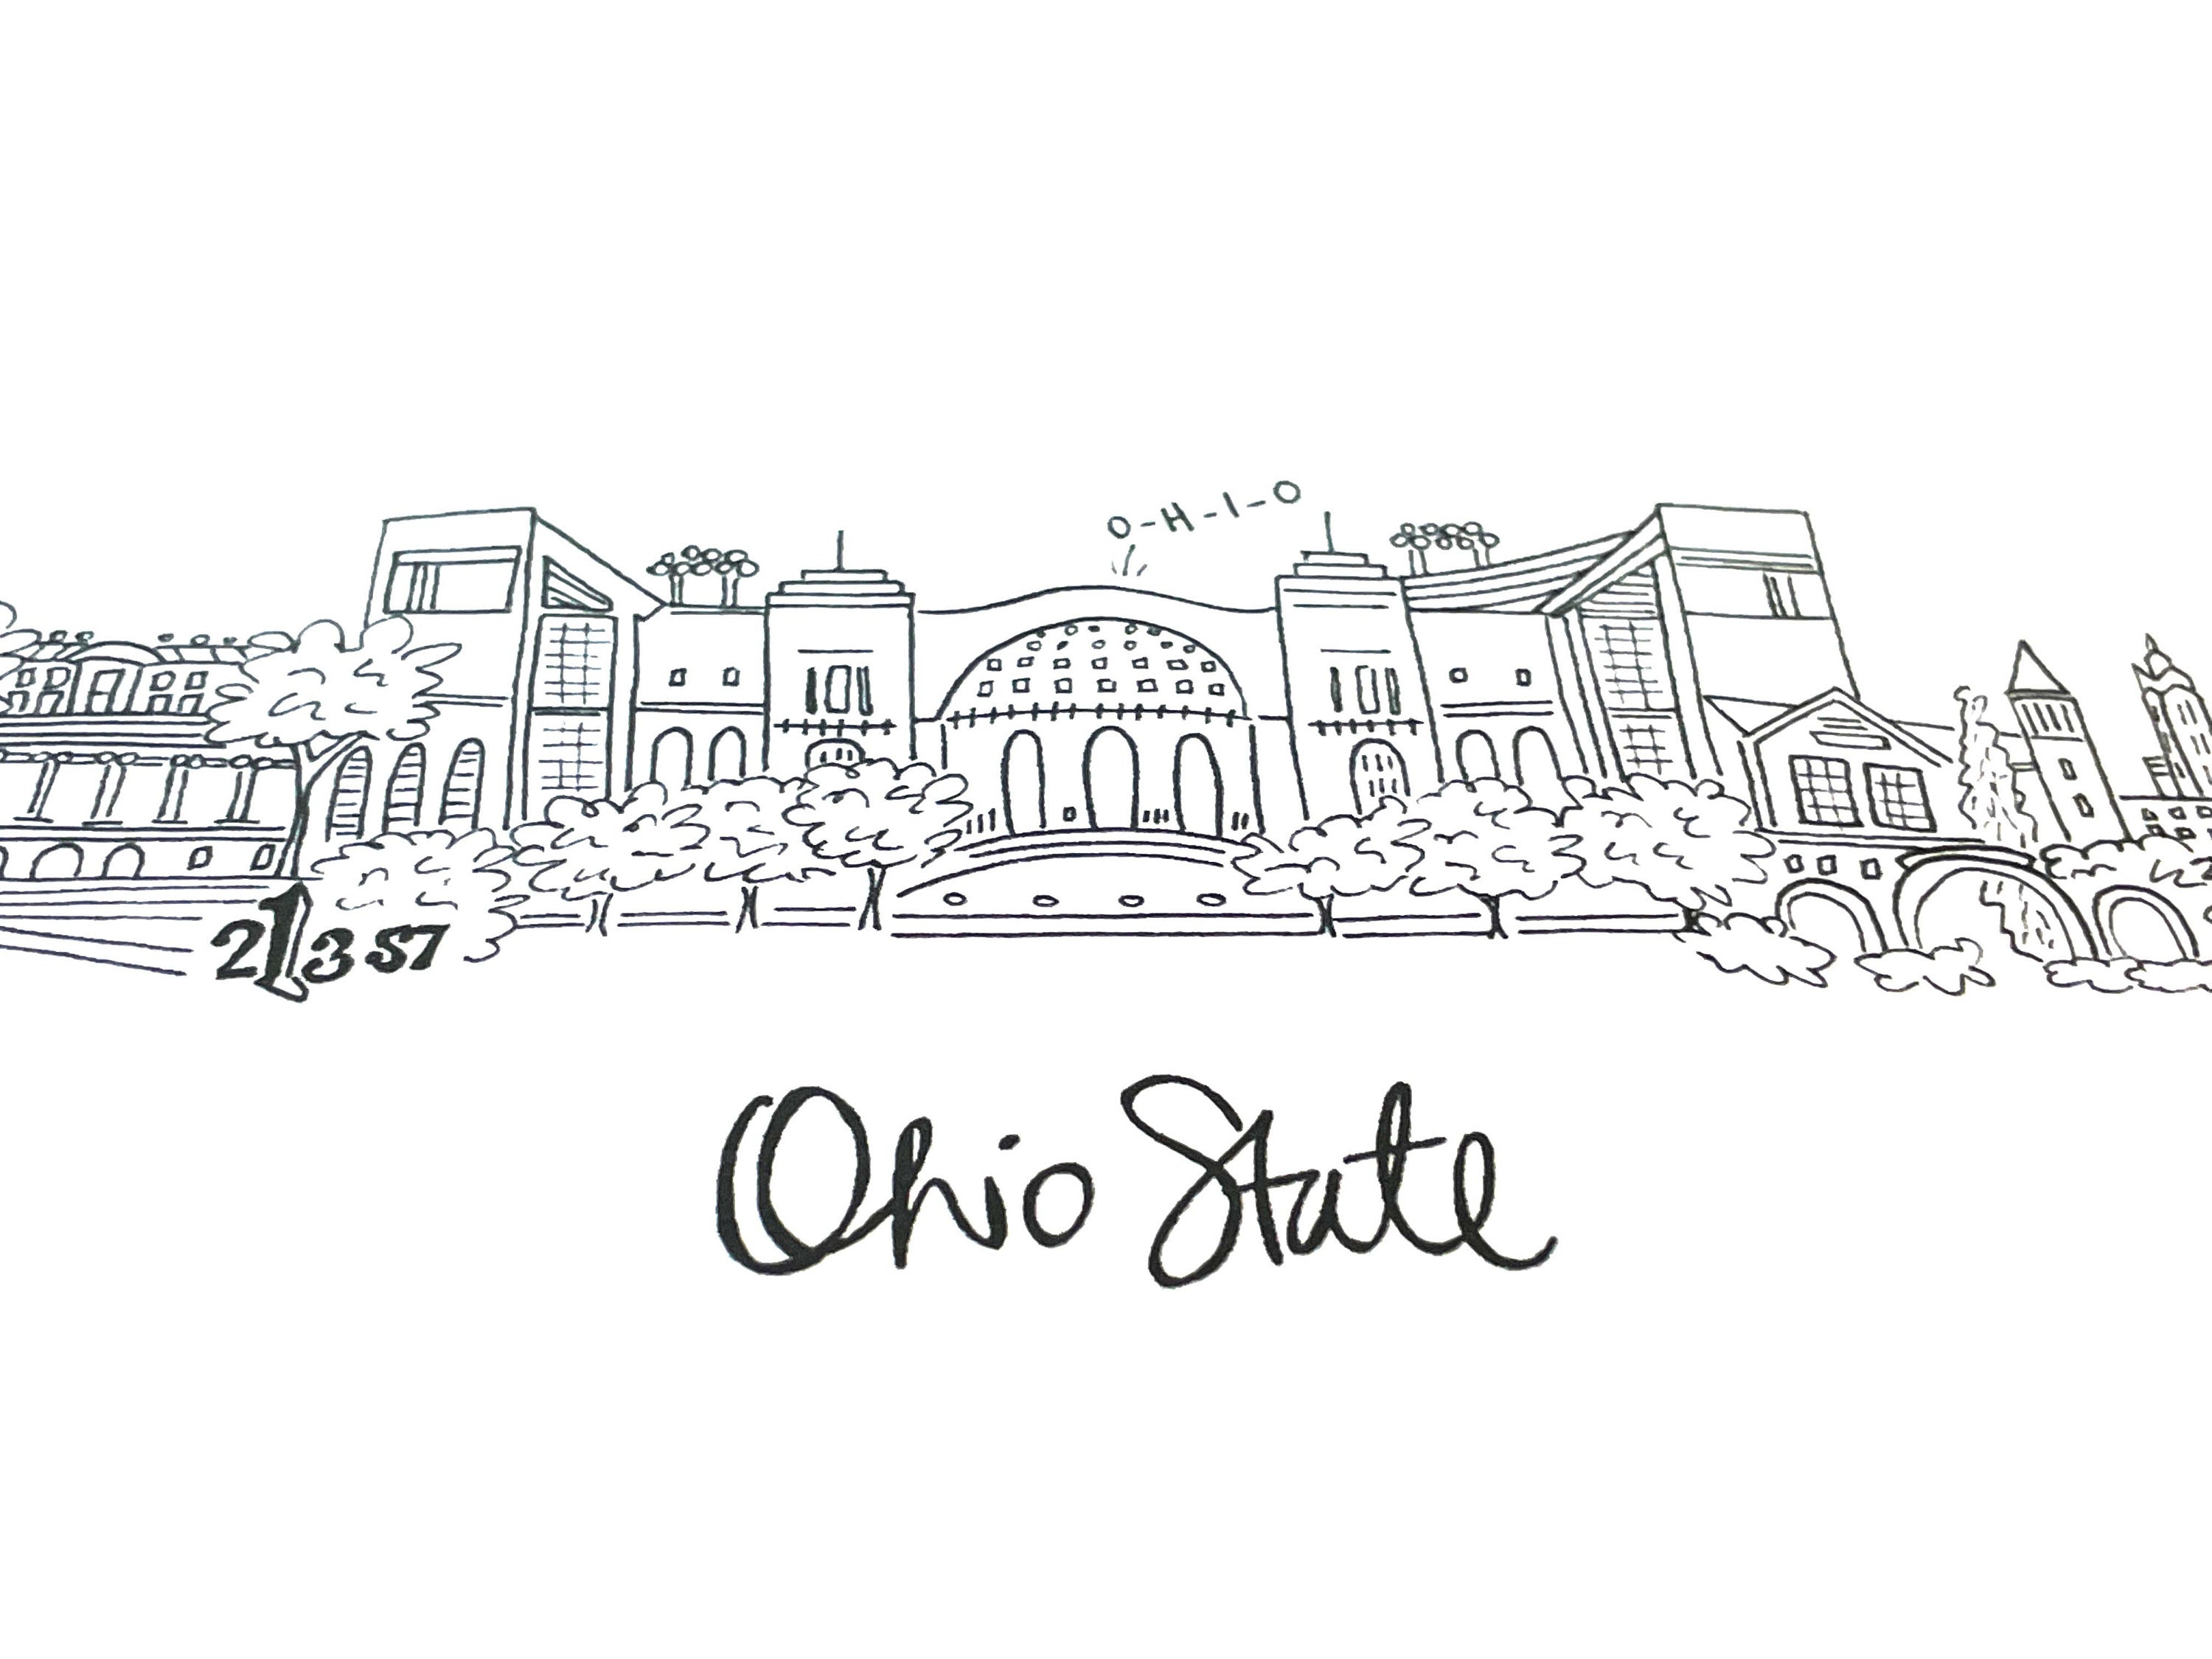 Ohio State University Fine Art Print